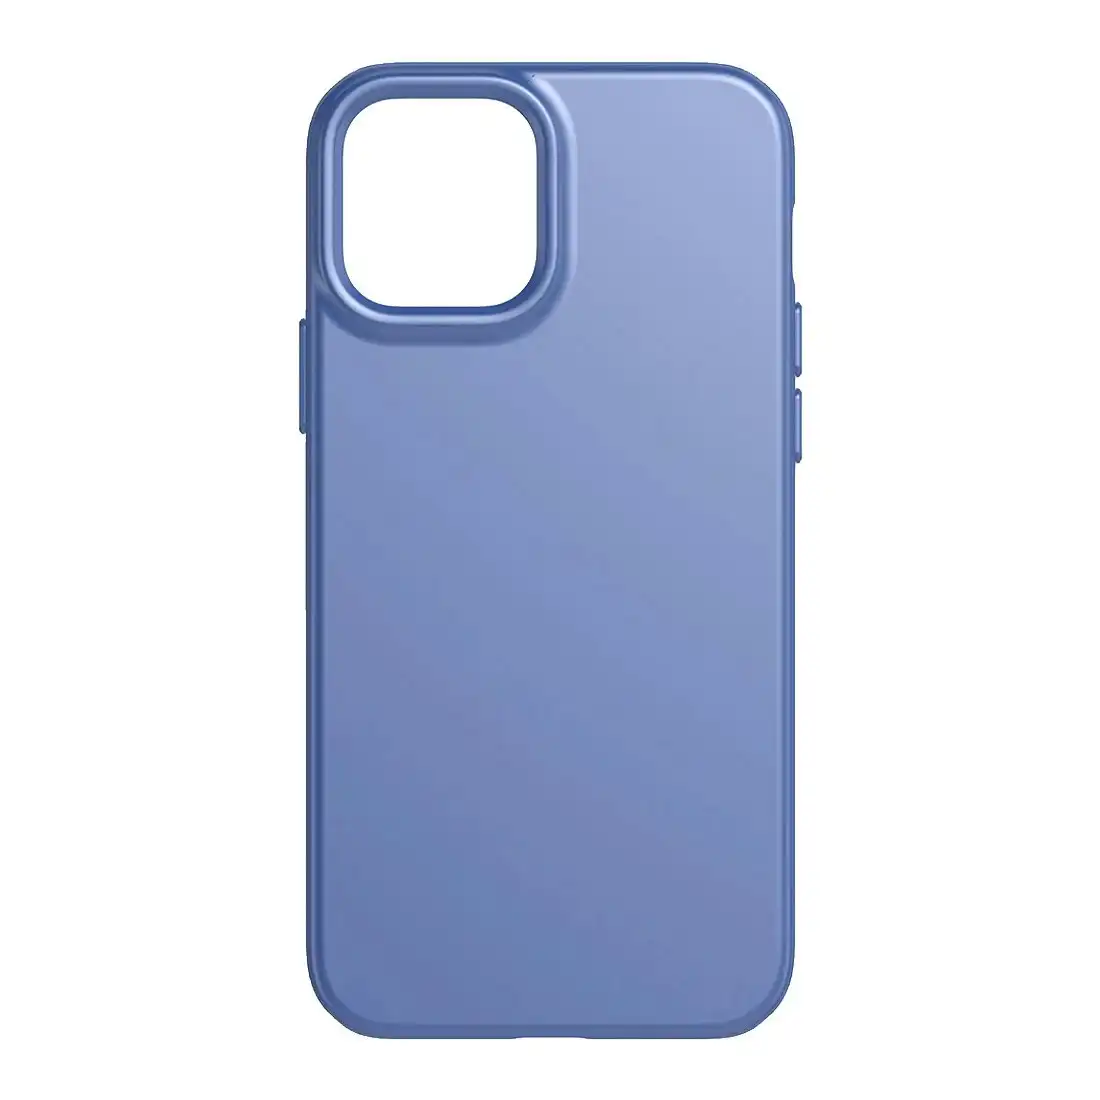 Tech21 Evo Slim iPhone 12/12 Pro T21-8385 - Classic Blue